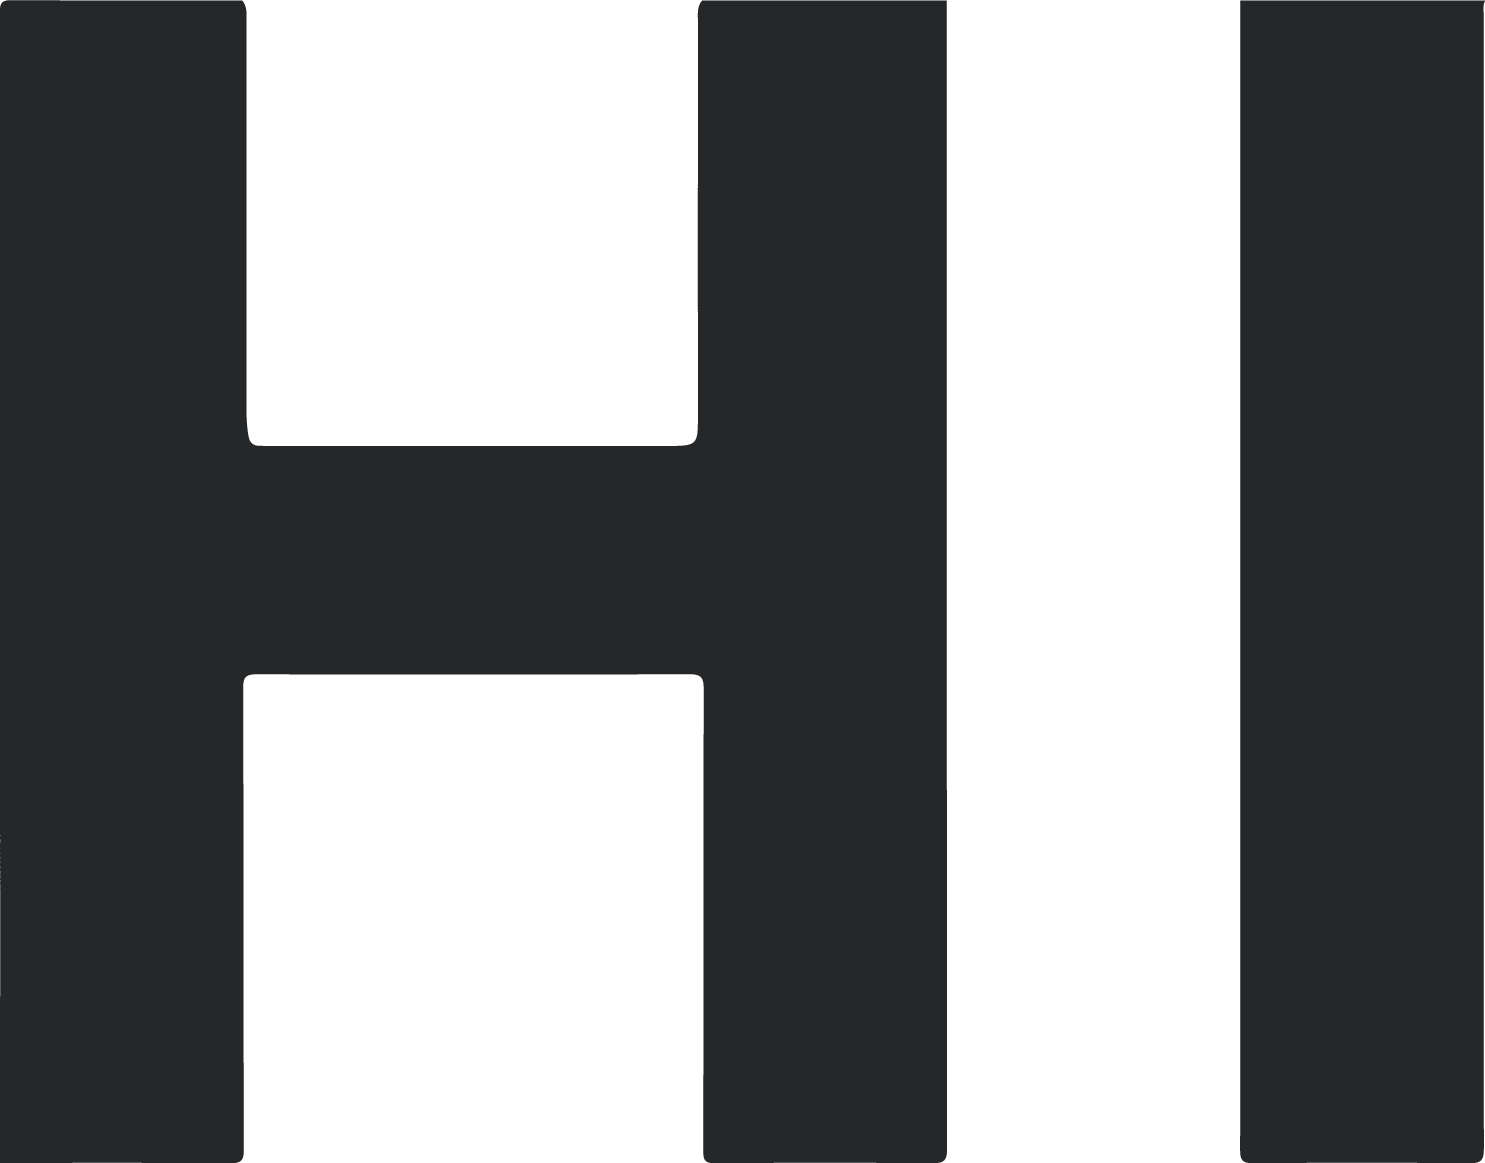 Hibbett Sports logo in transparent PNG format